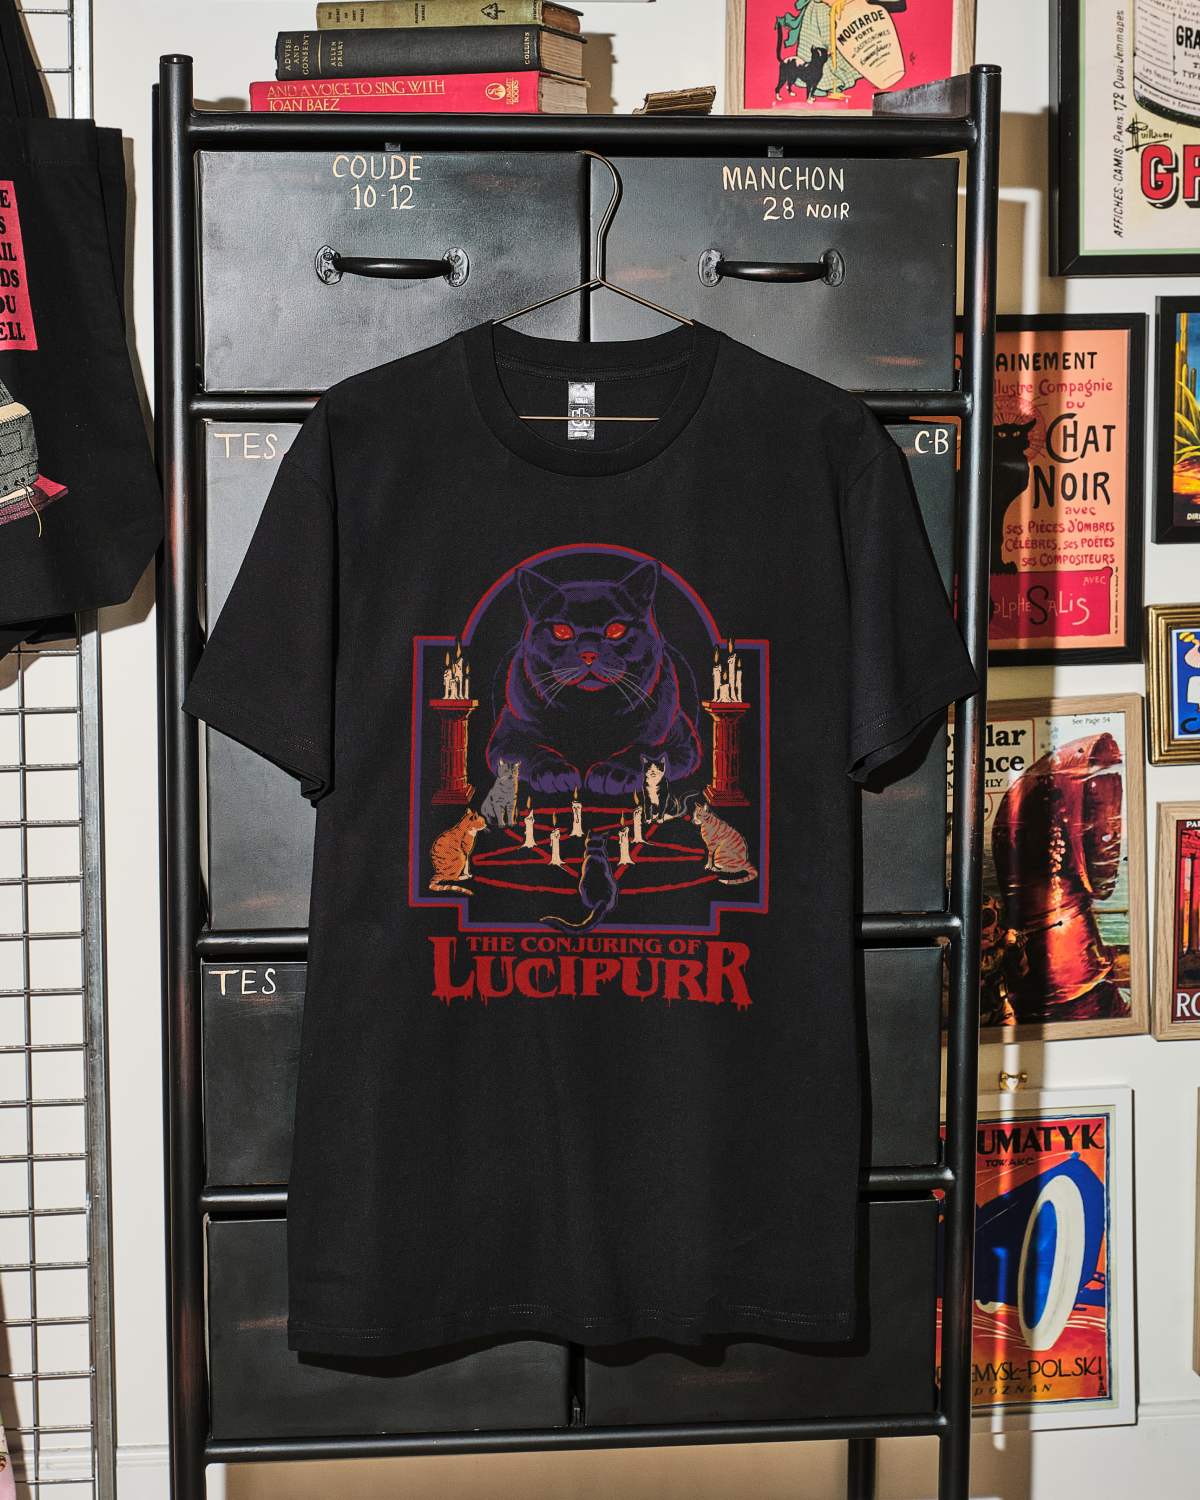 The Conjuring of Lucipurr T-Shirt Australia Online